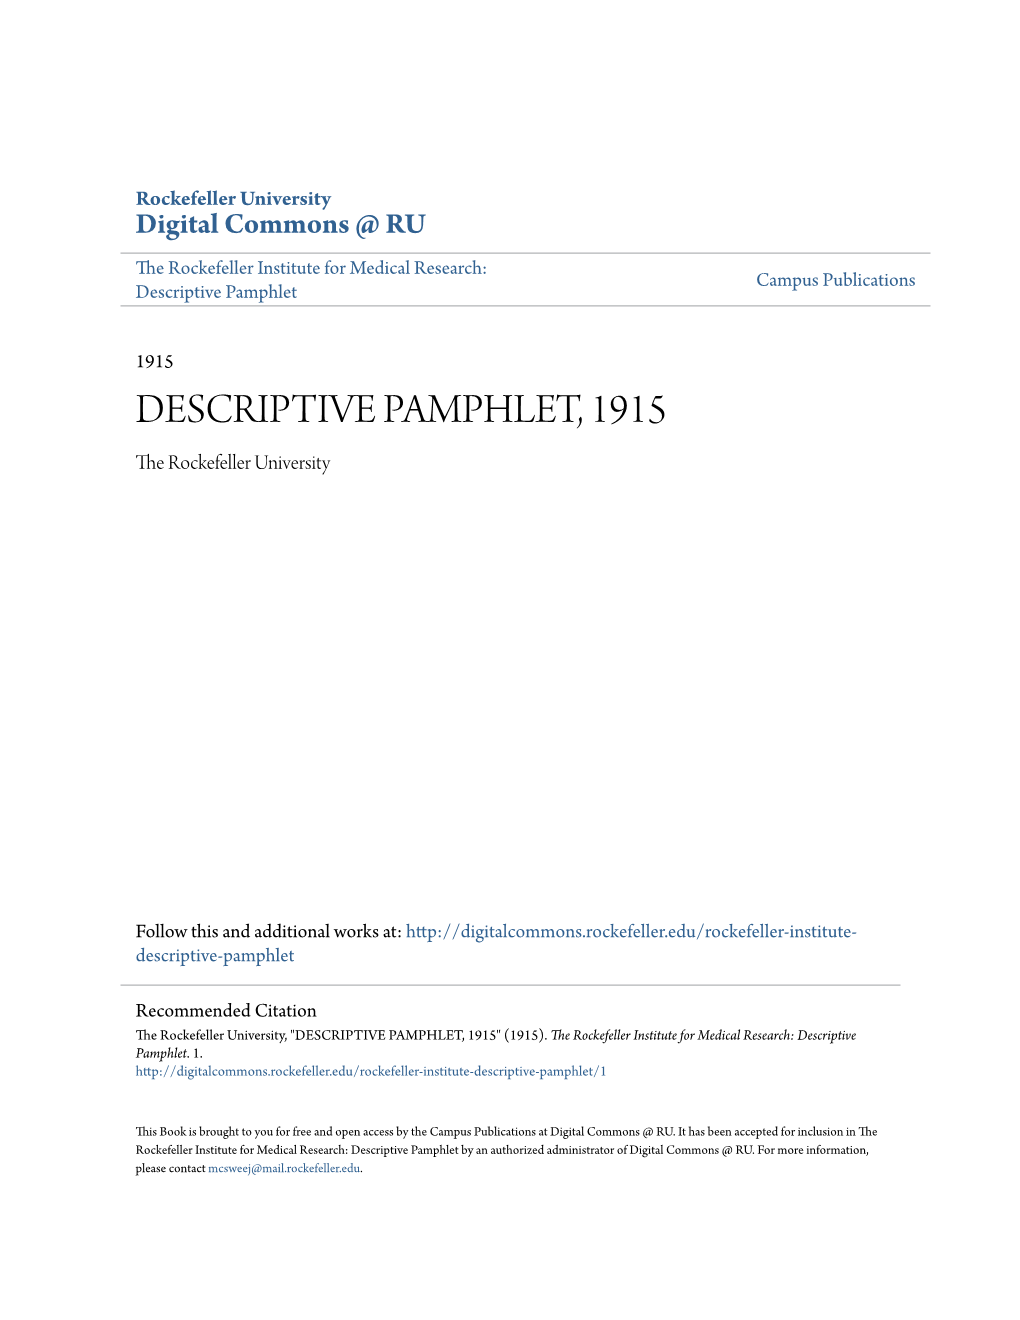 DESCRIPTIVE PAMPHLET, 1915 the Rockefeller University